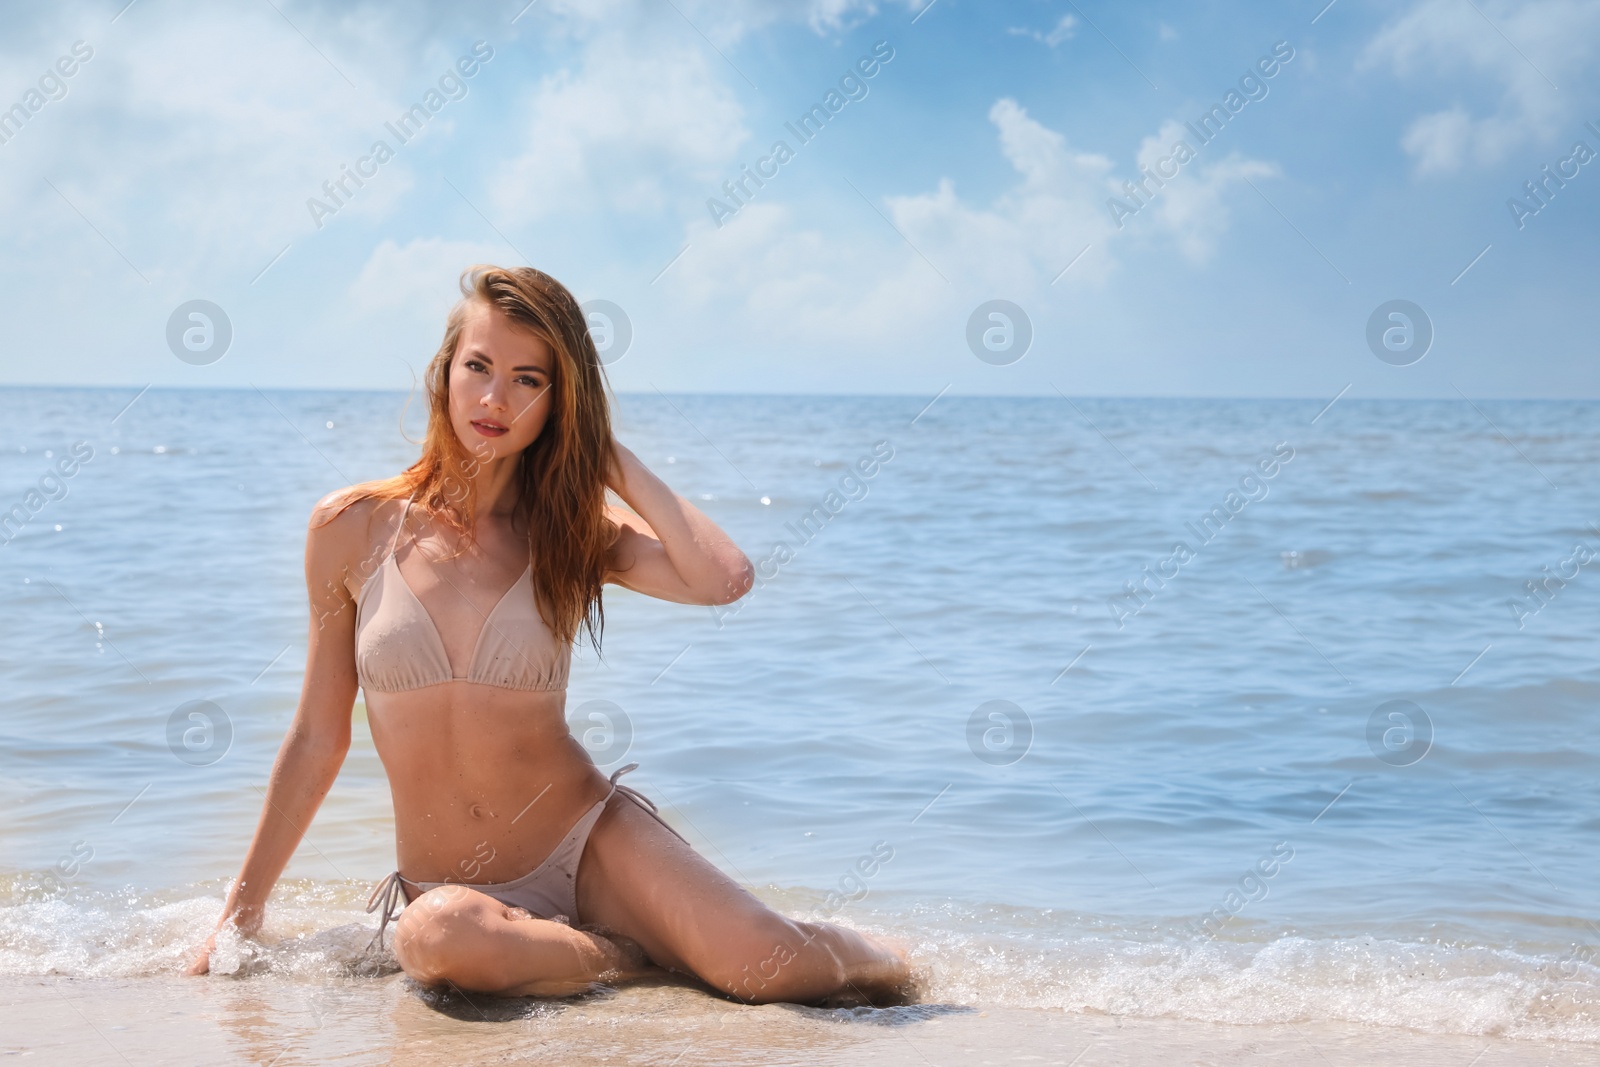 Photo of Attractive woman in bikini sitting on seashore